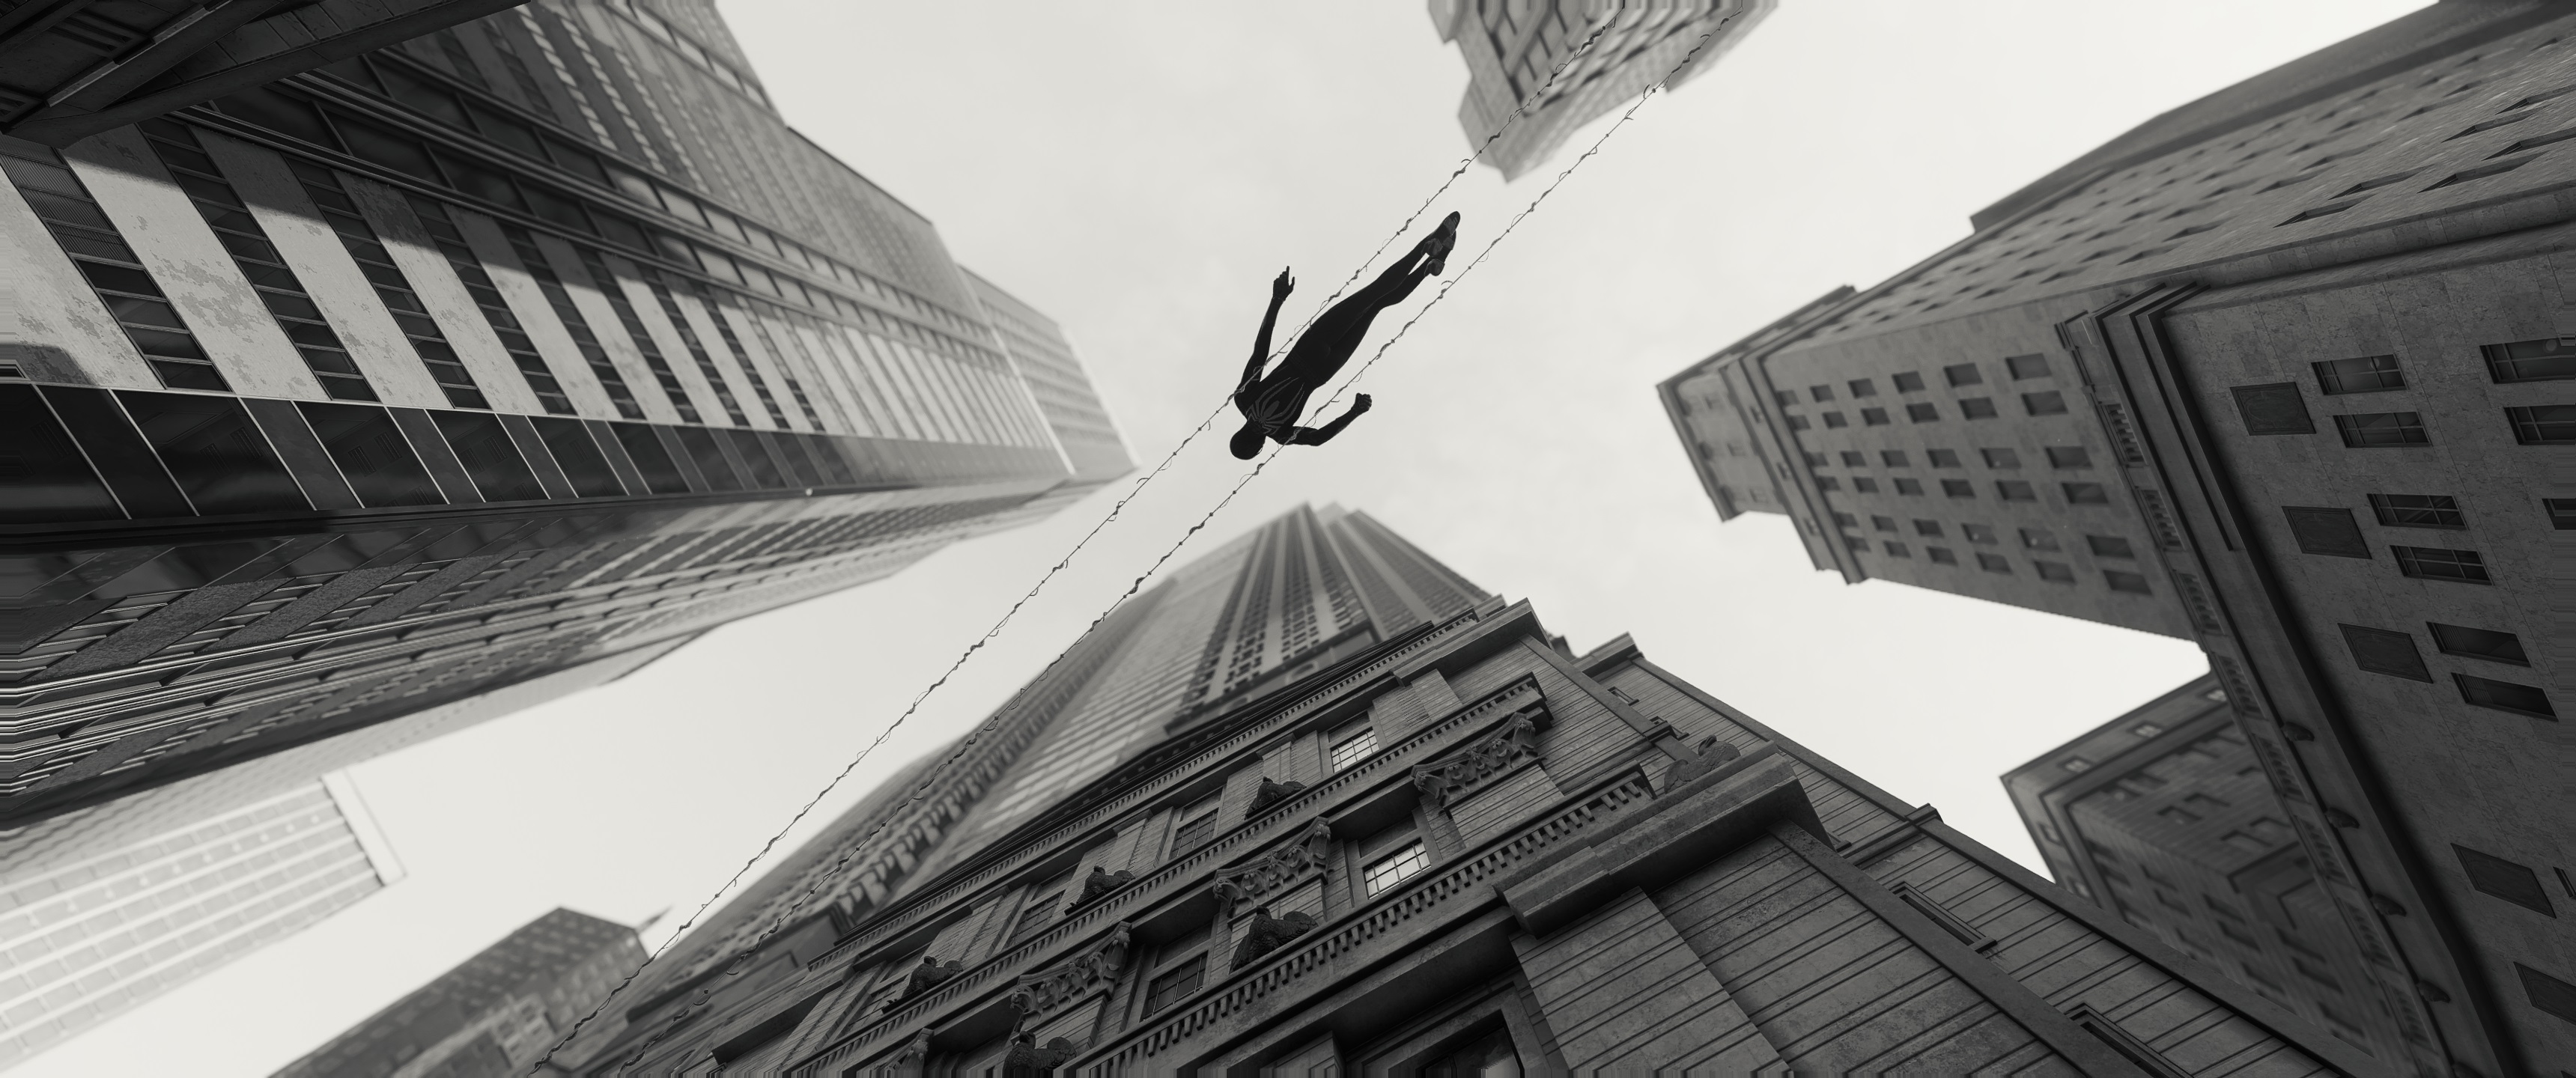 Spider Man Peter Parker New York City Video Games Building Superhero 3440x1440